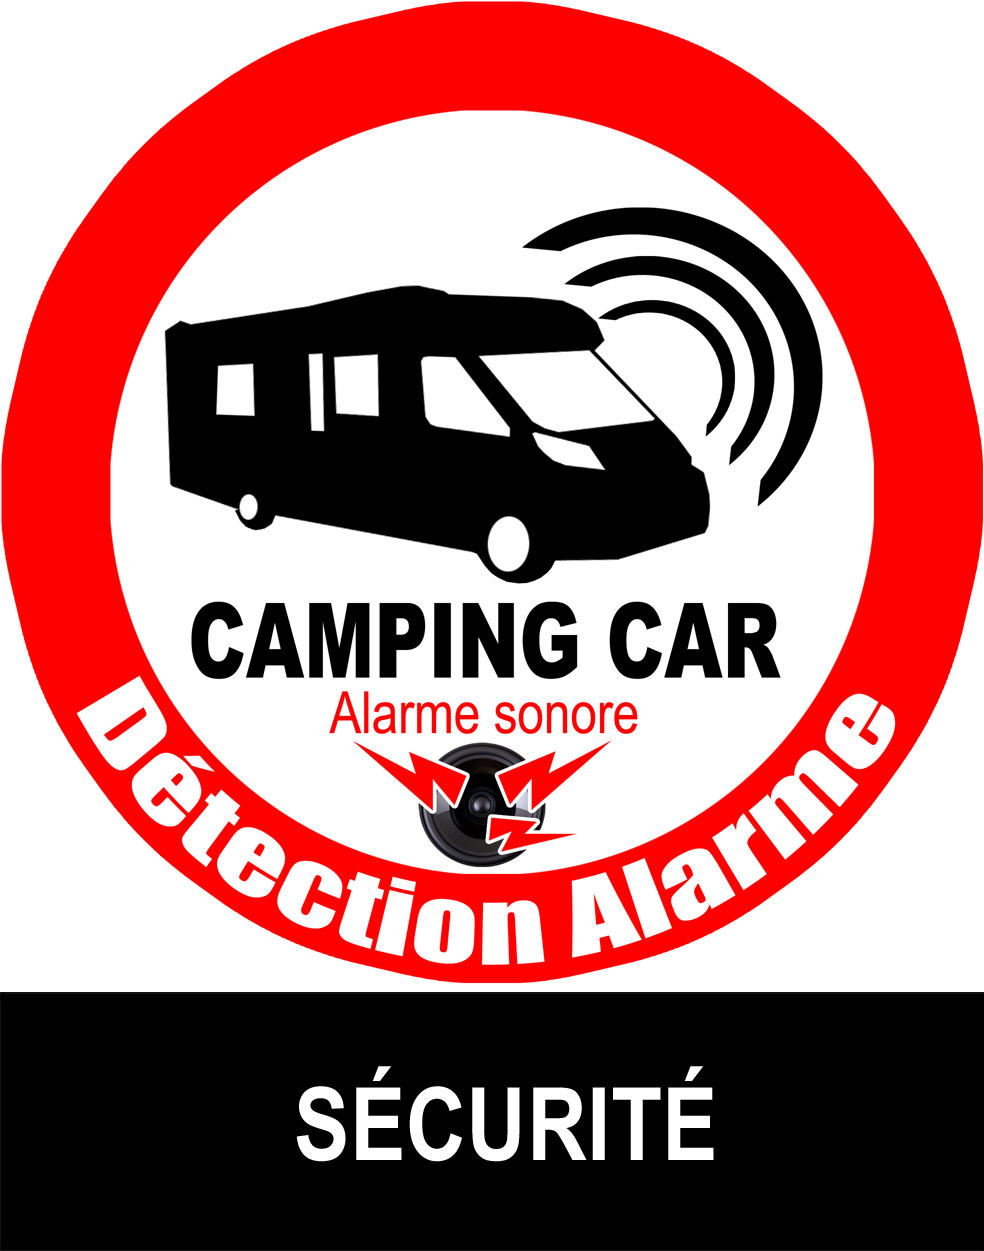 Détection Alarme intrusion sonore camping car autocollant adhésif sticker